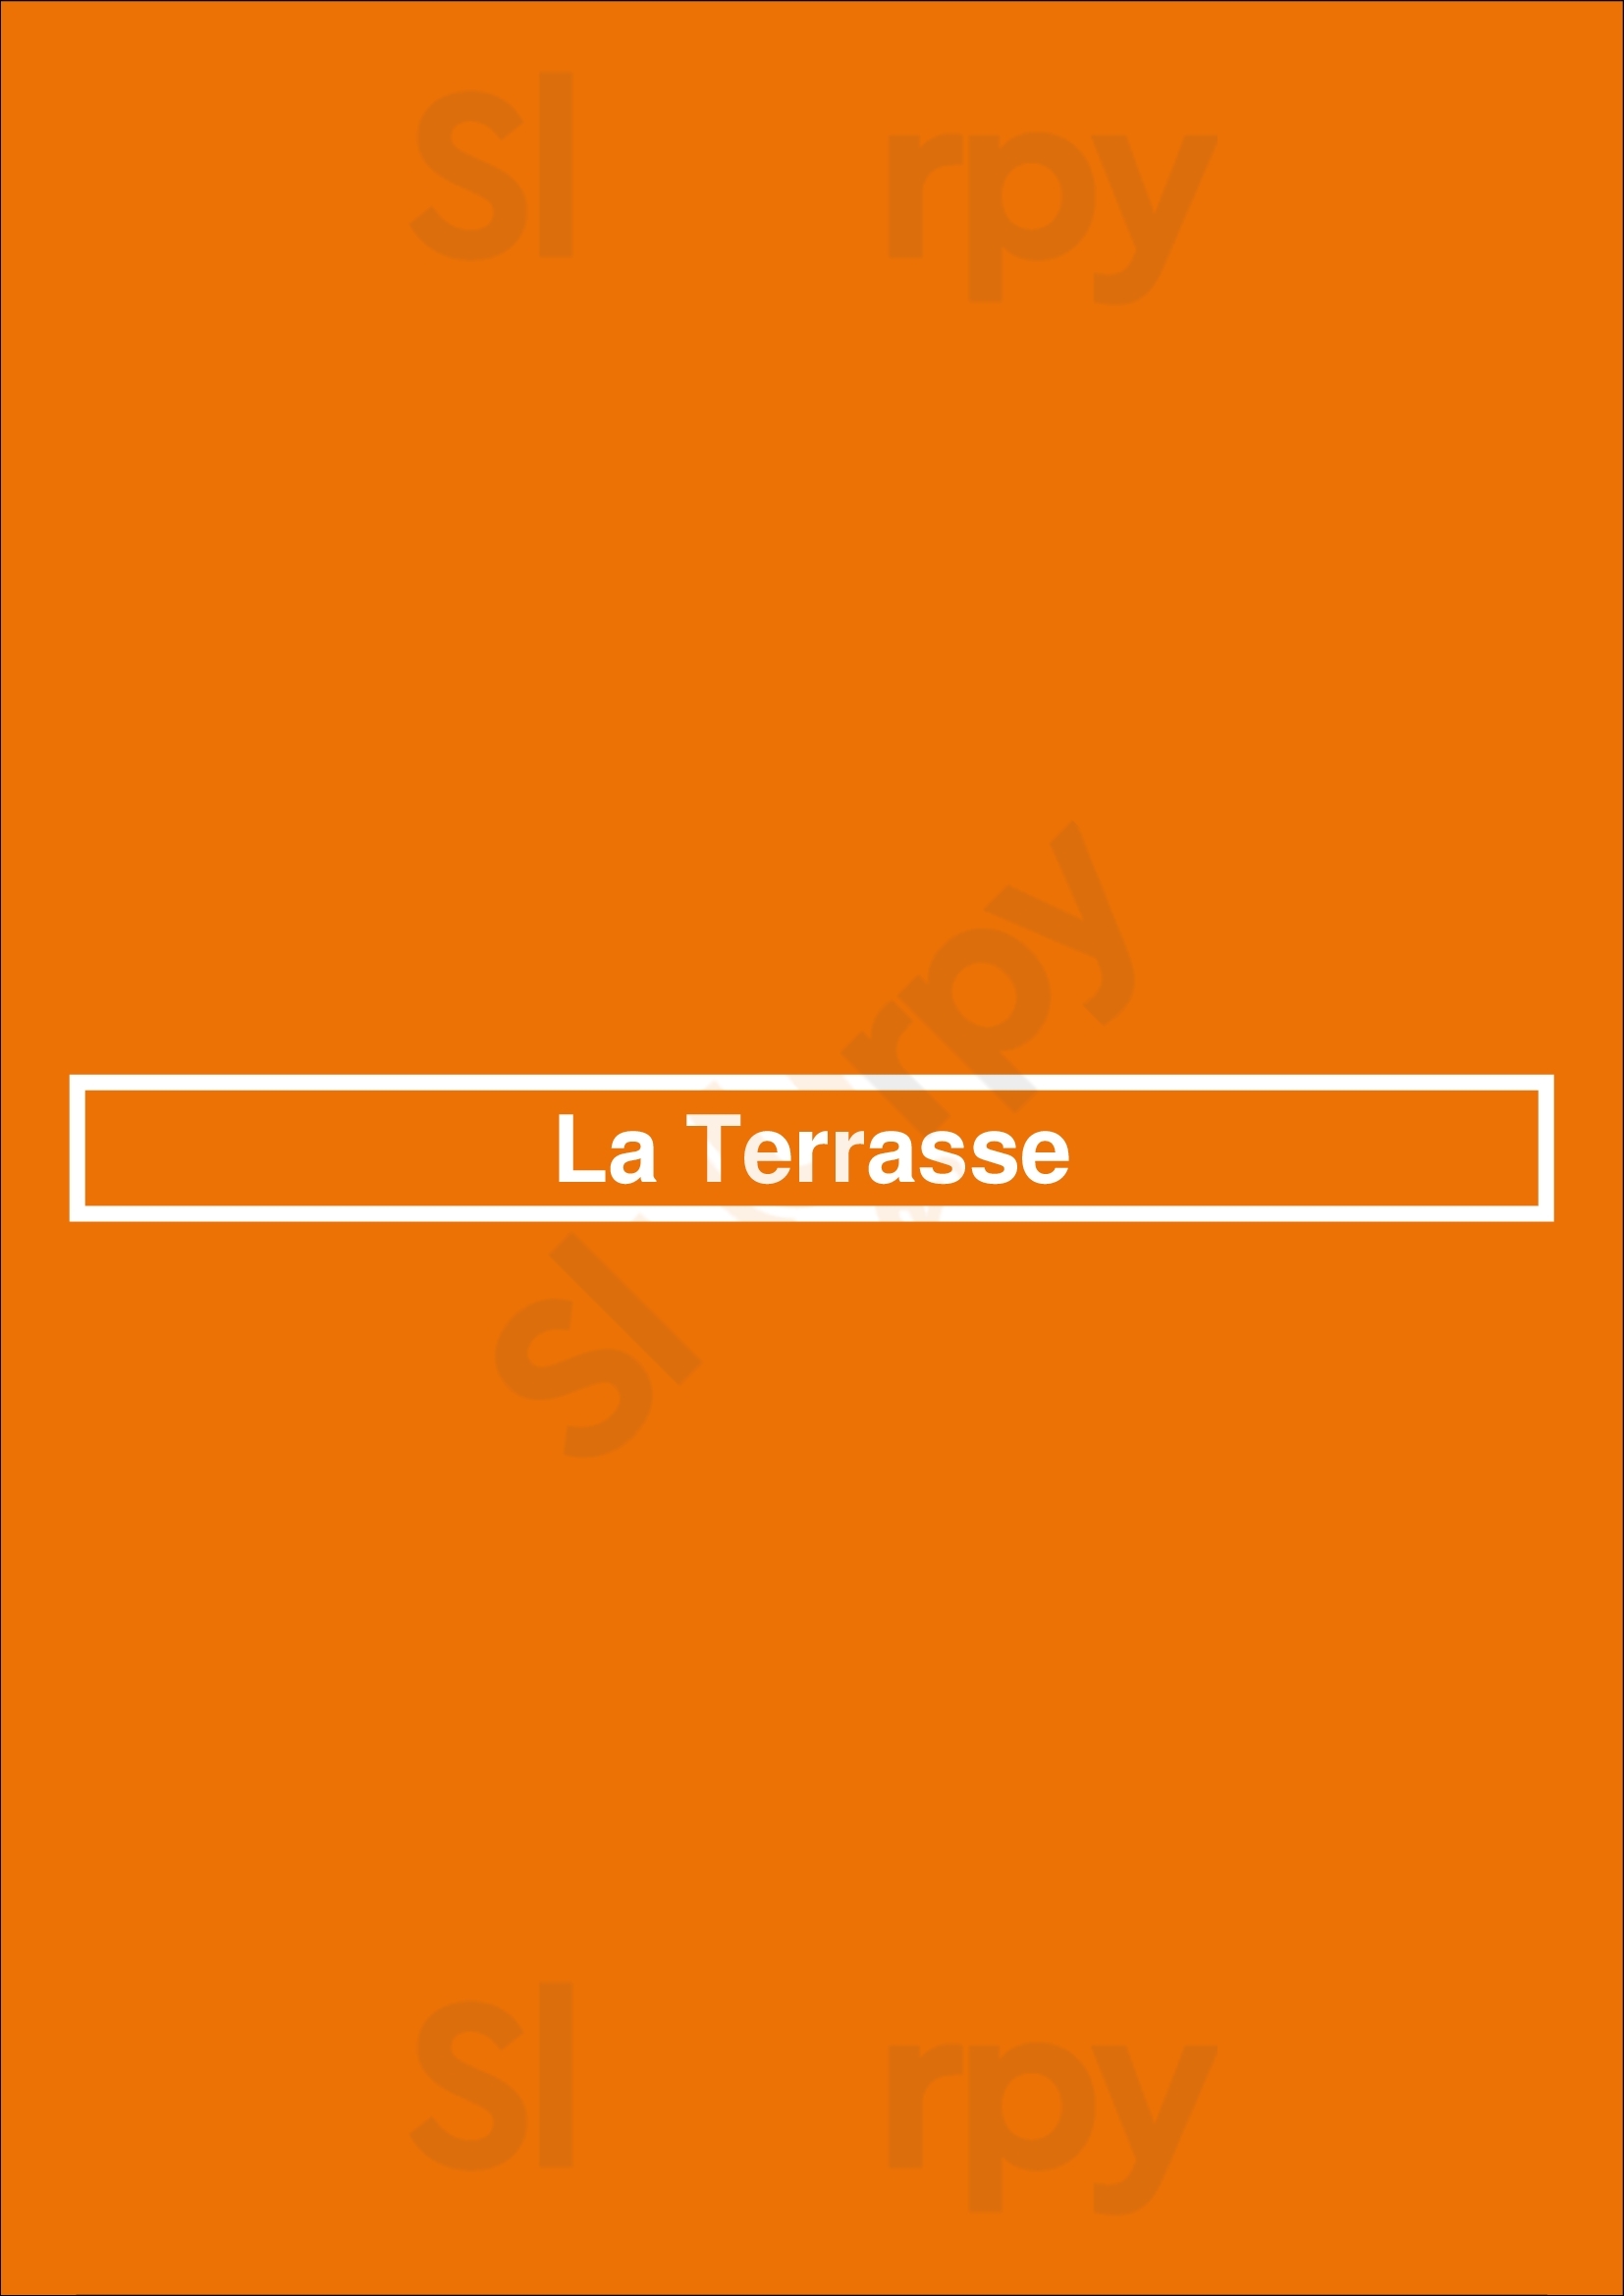 La Terrasse Nice Menu - 1